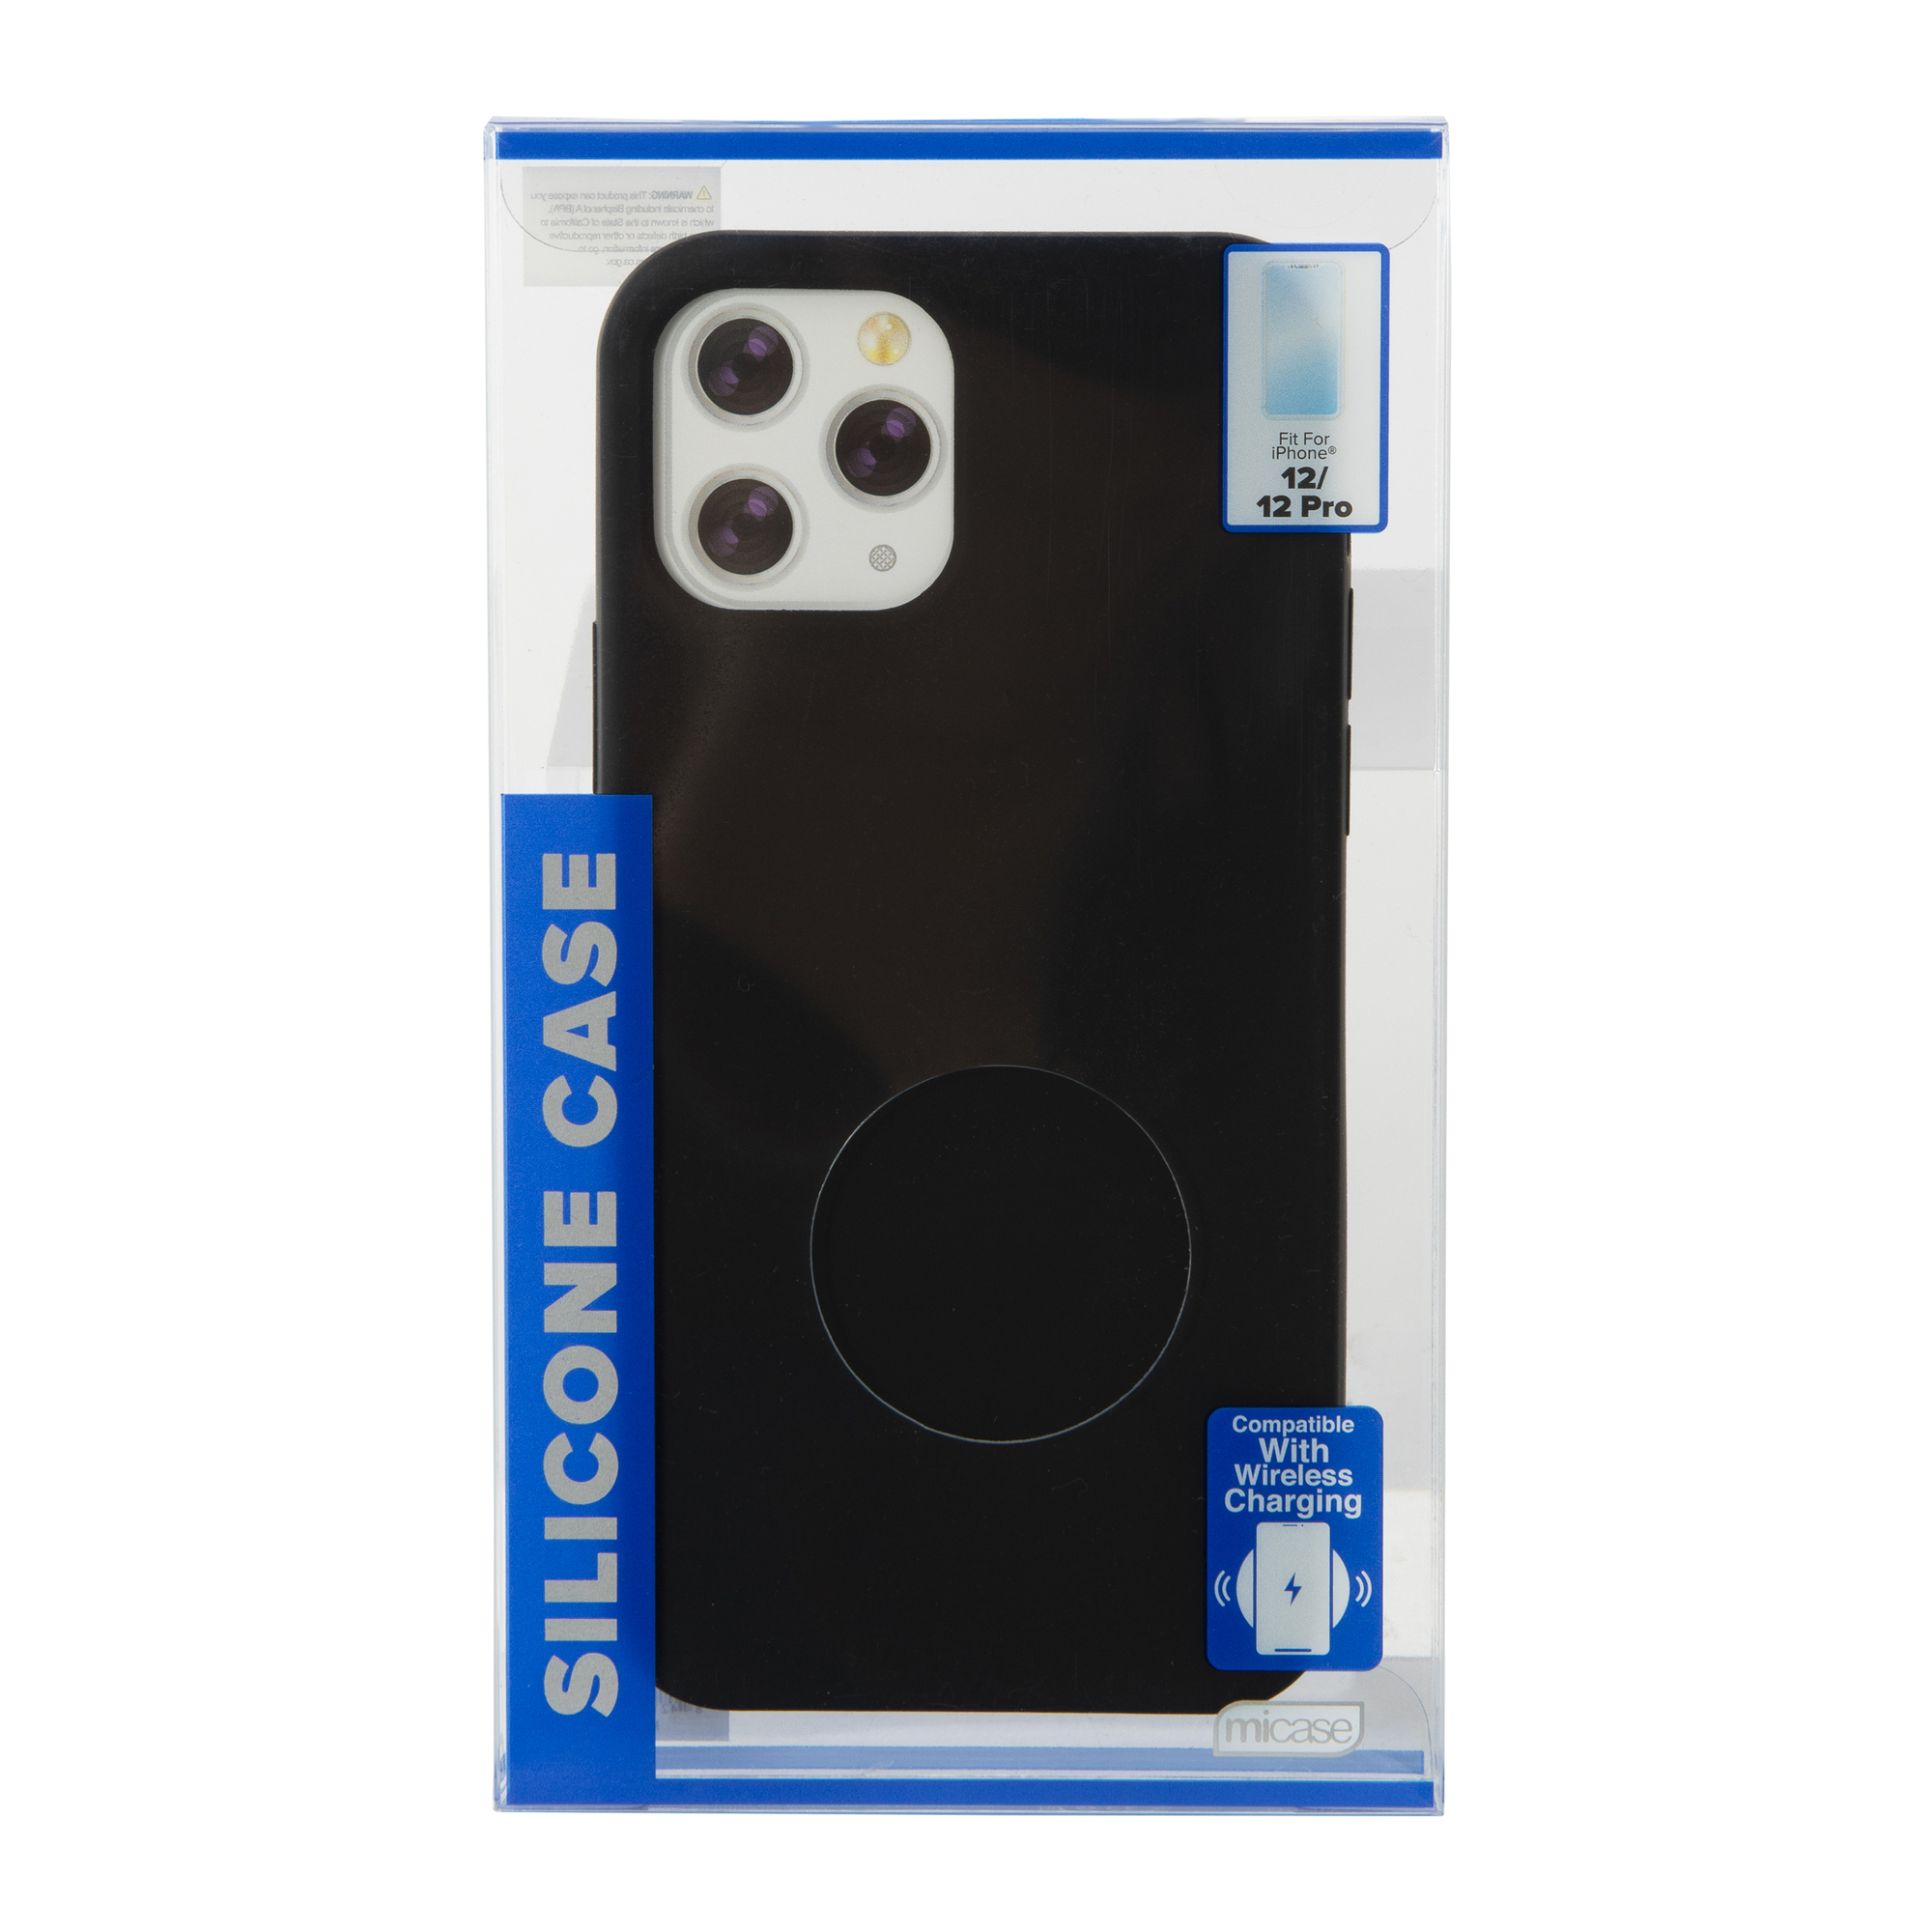 iPhone 12®/iPhone 12 Pro® silicone phone case